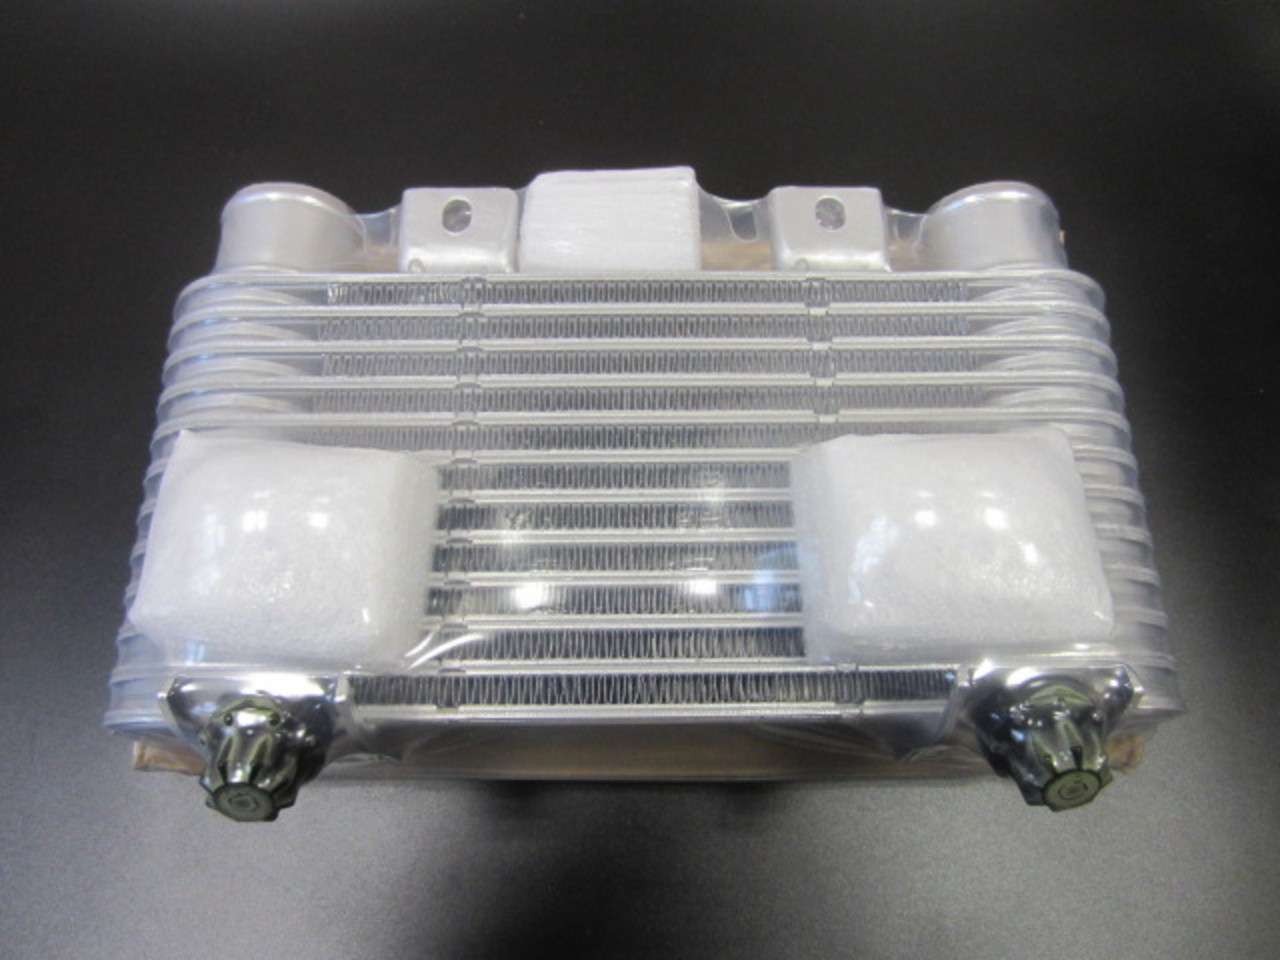 Радиатор интеркулера на Mazda B-серия (UN) 1999-2006 / Mazda BT-50 2006-2012 / Ford Ranger 1998-2006 / Ford Ranger 2006-2012